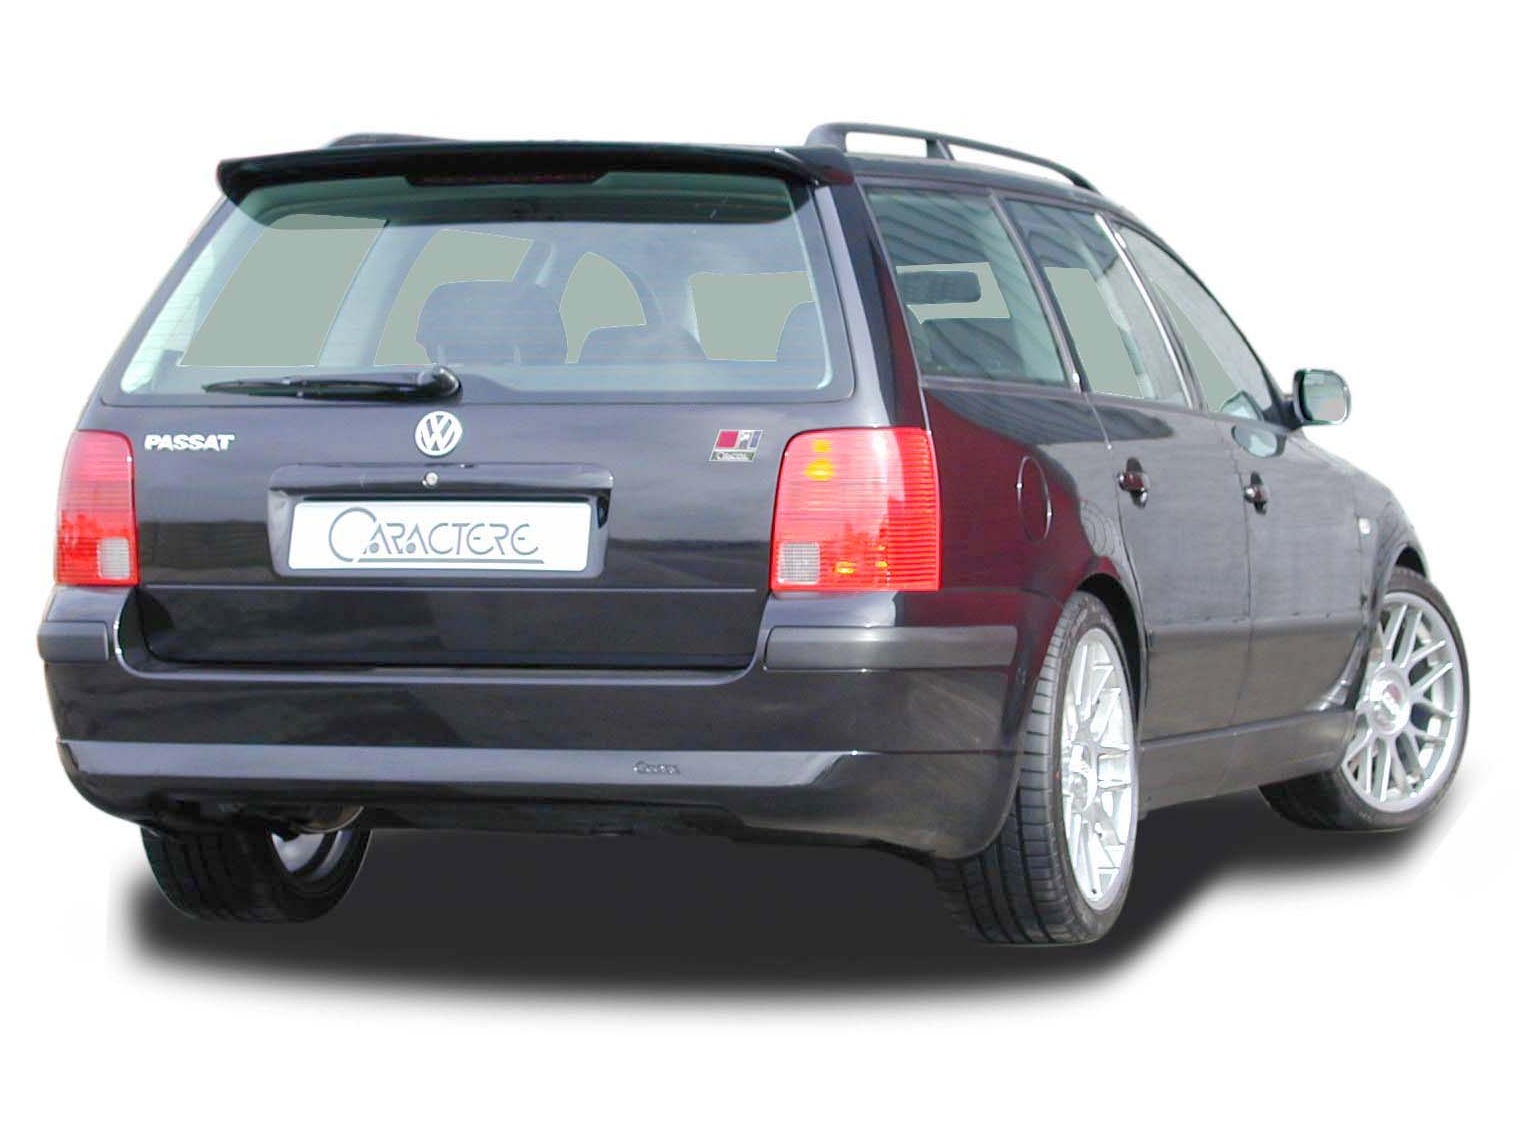 Пассат 5 универсал. VW Passat b5 универсал. Passat b5.5 универсал. Volkswagen Passat b5 Plus универсал. Volkswagen Passat b5 variant.